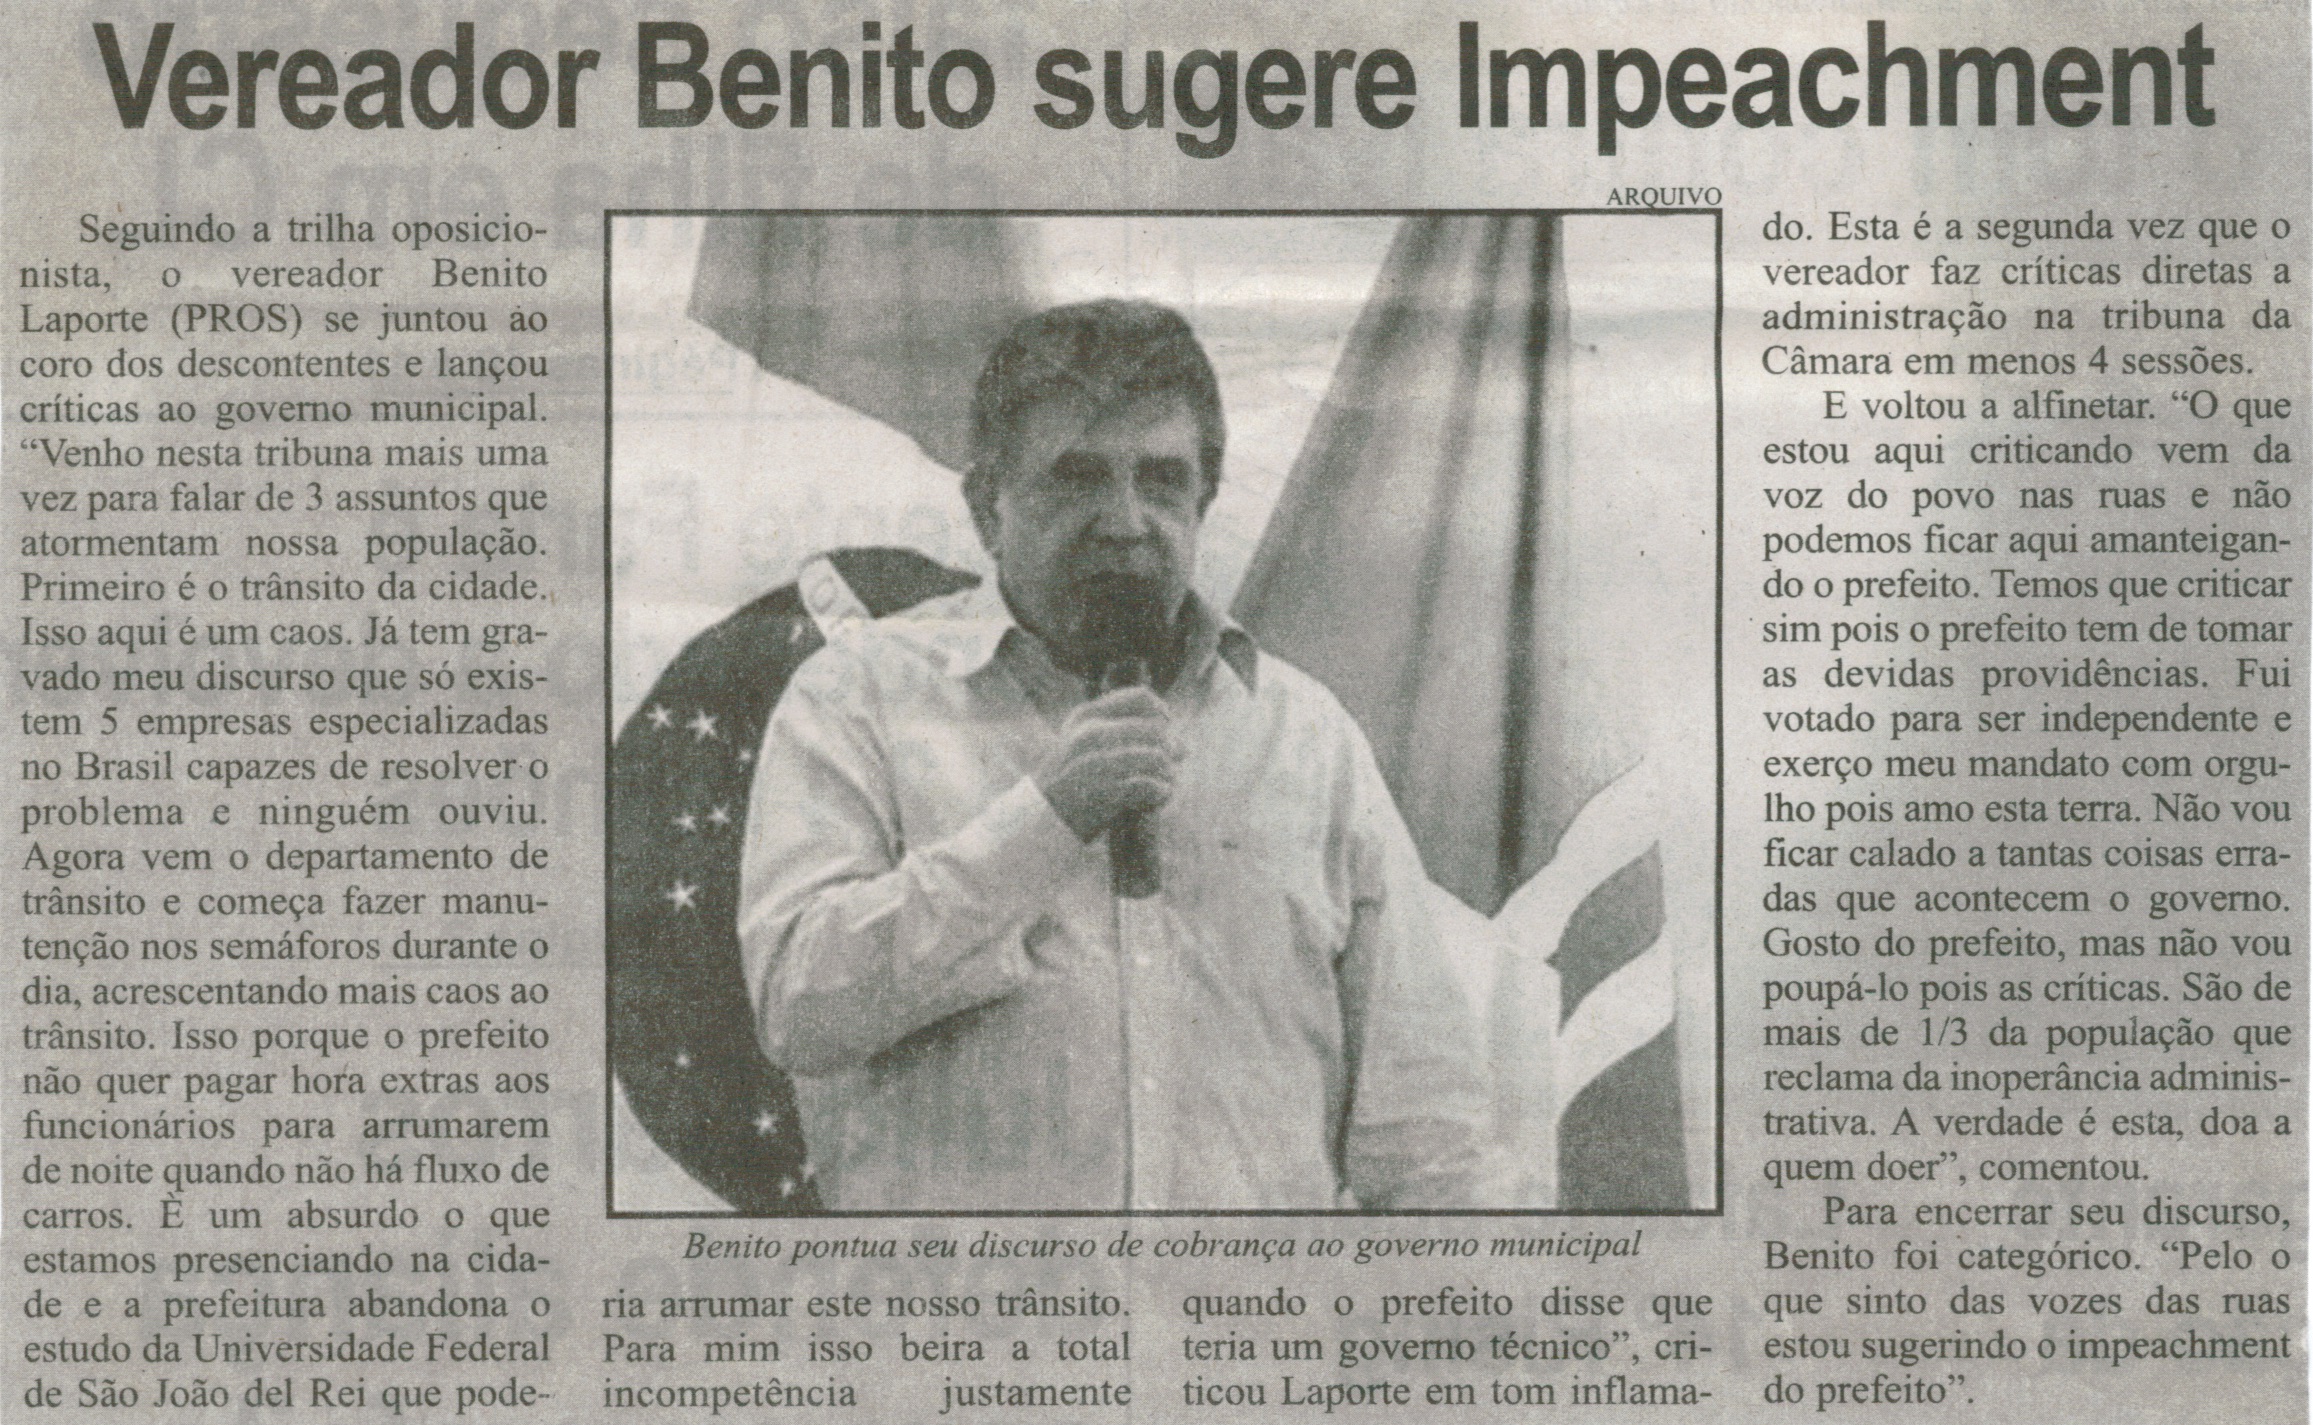 Vereador Benito sugere Impeachment. Correio de Minas, Conselheiro Lafaiete, 28 fev. 2015, p. 02.